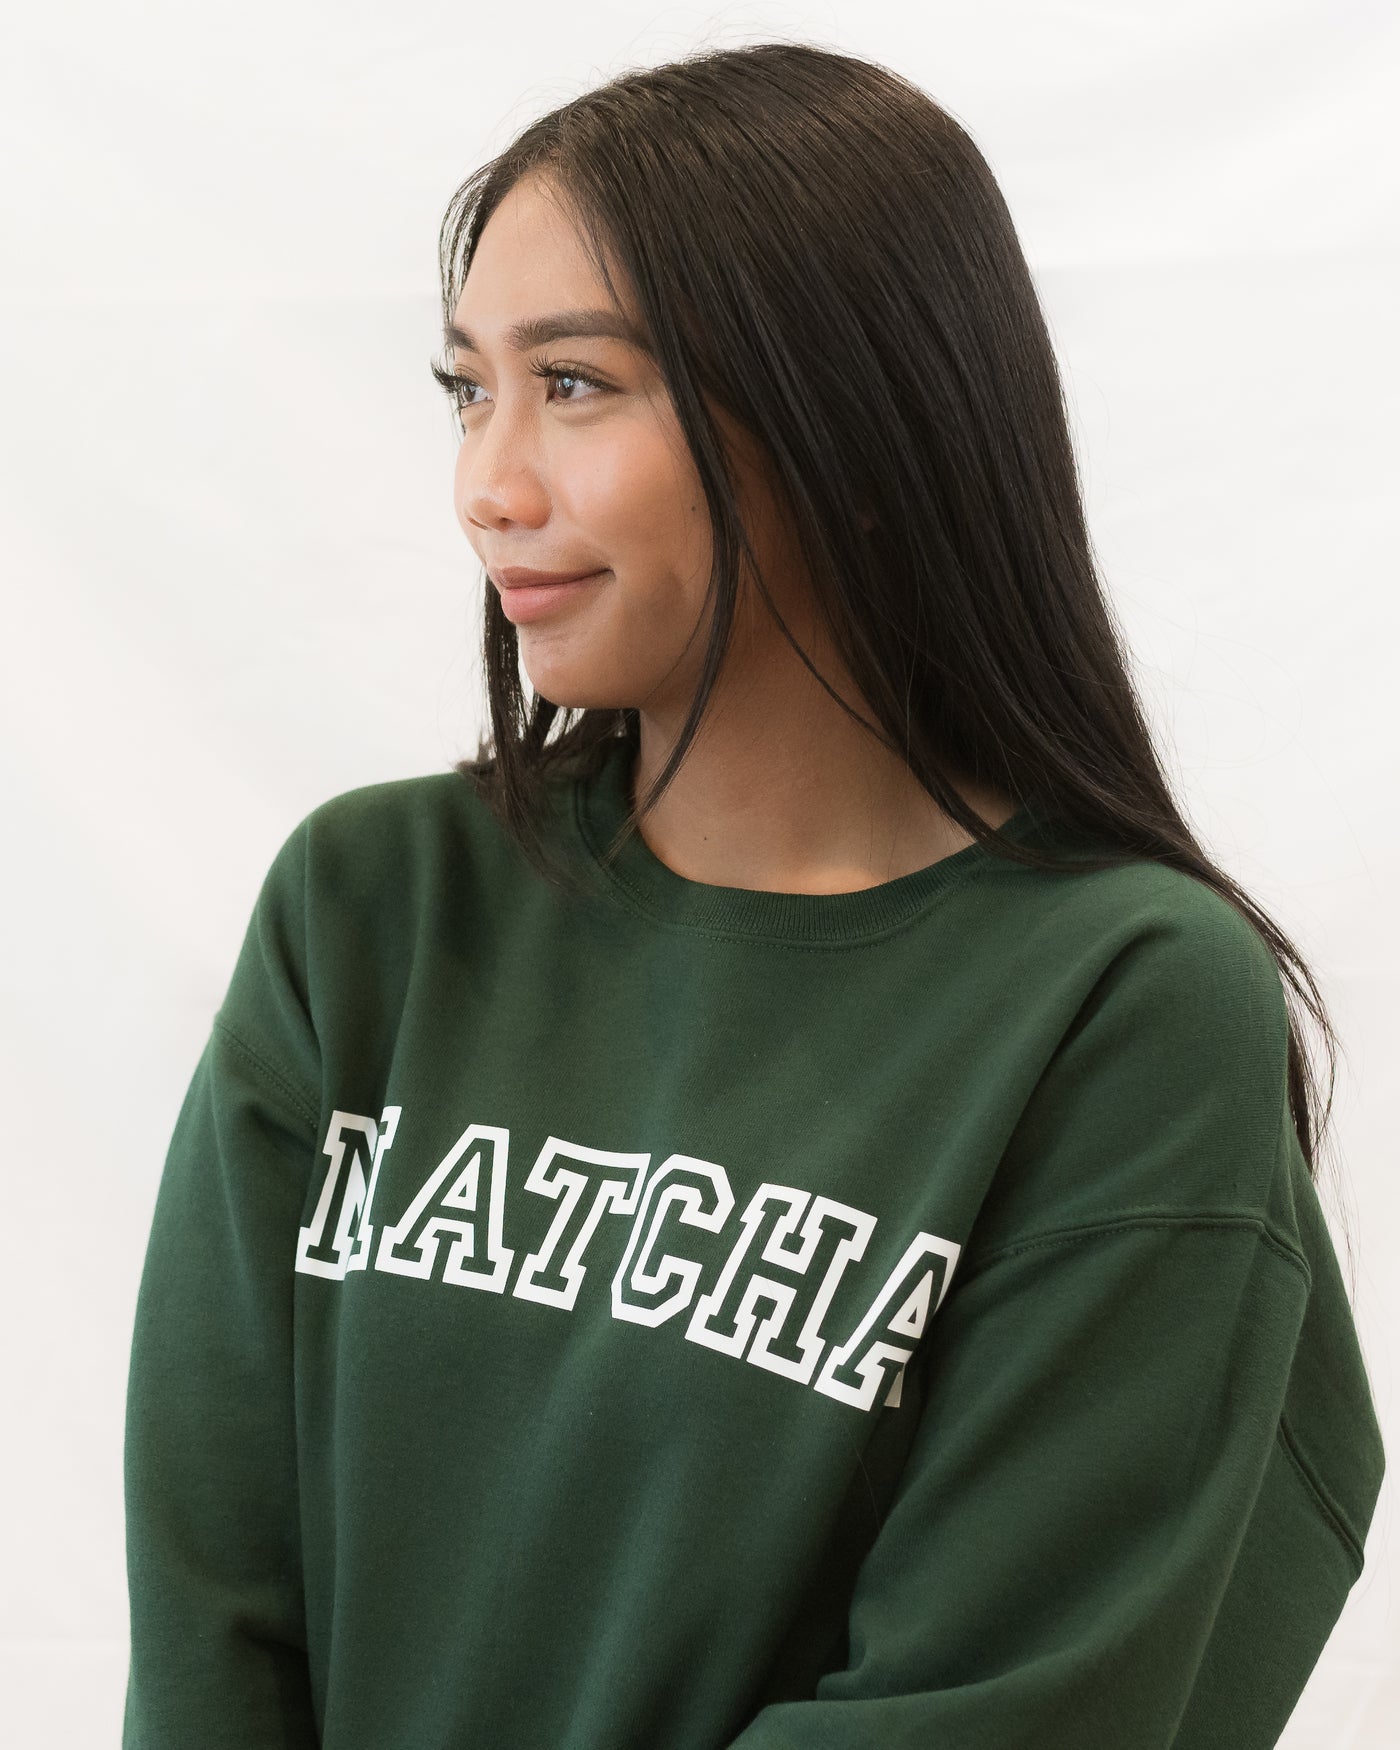 Matcha Squad Sweatshirt: Ideal Gift for Matcha Enthusiasts